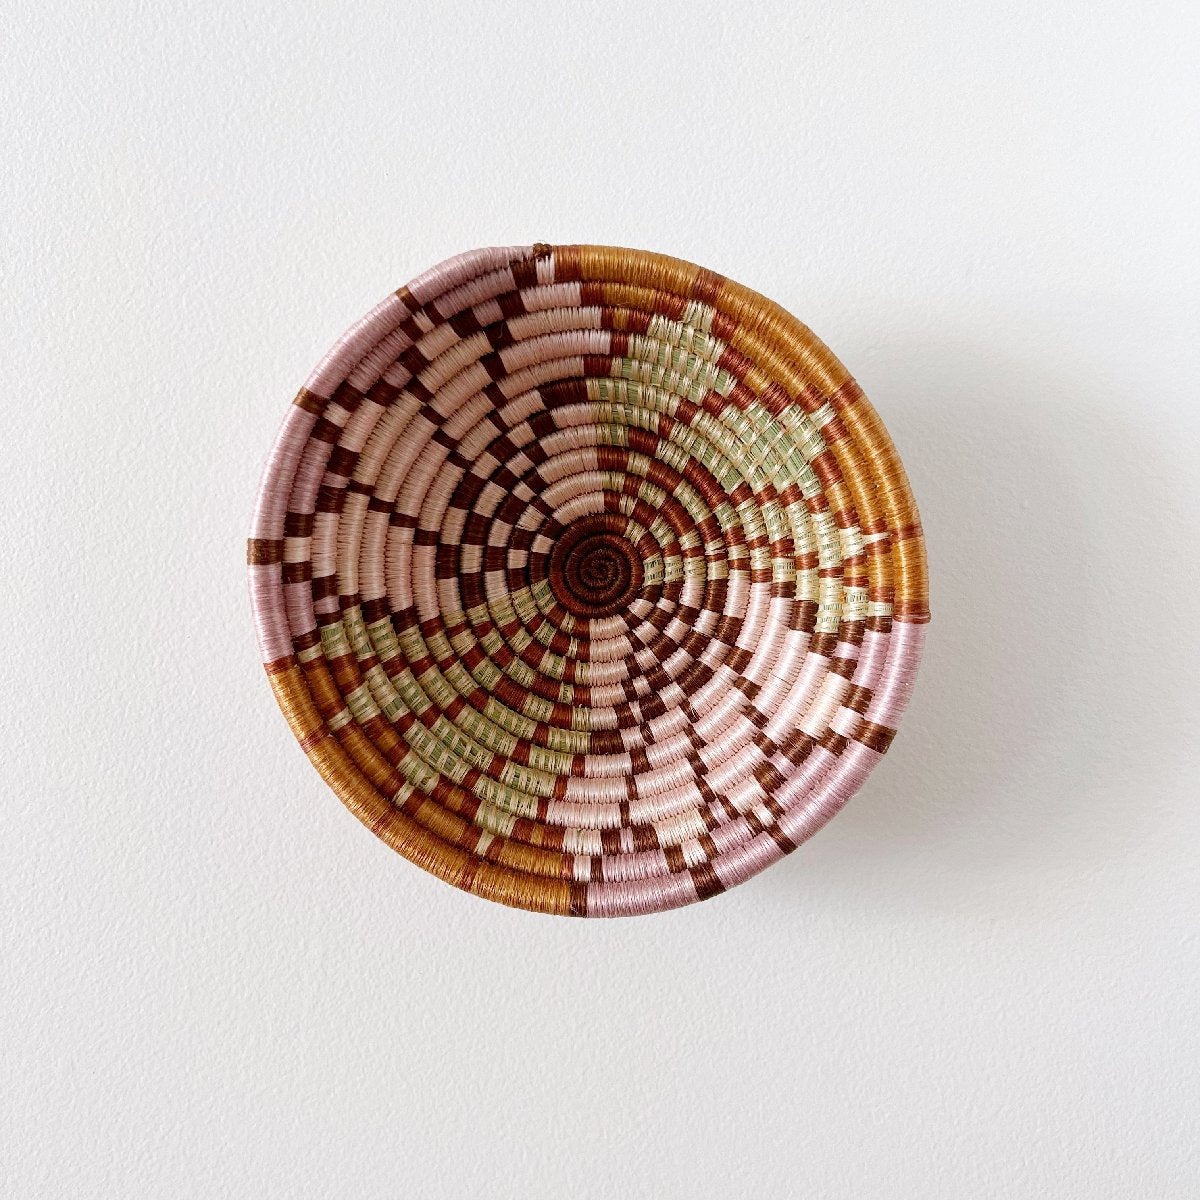 mondocherry - "Shyorongi" African woven bowl | midsize #2